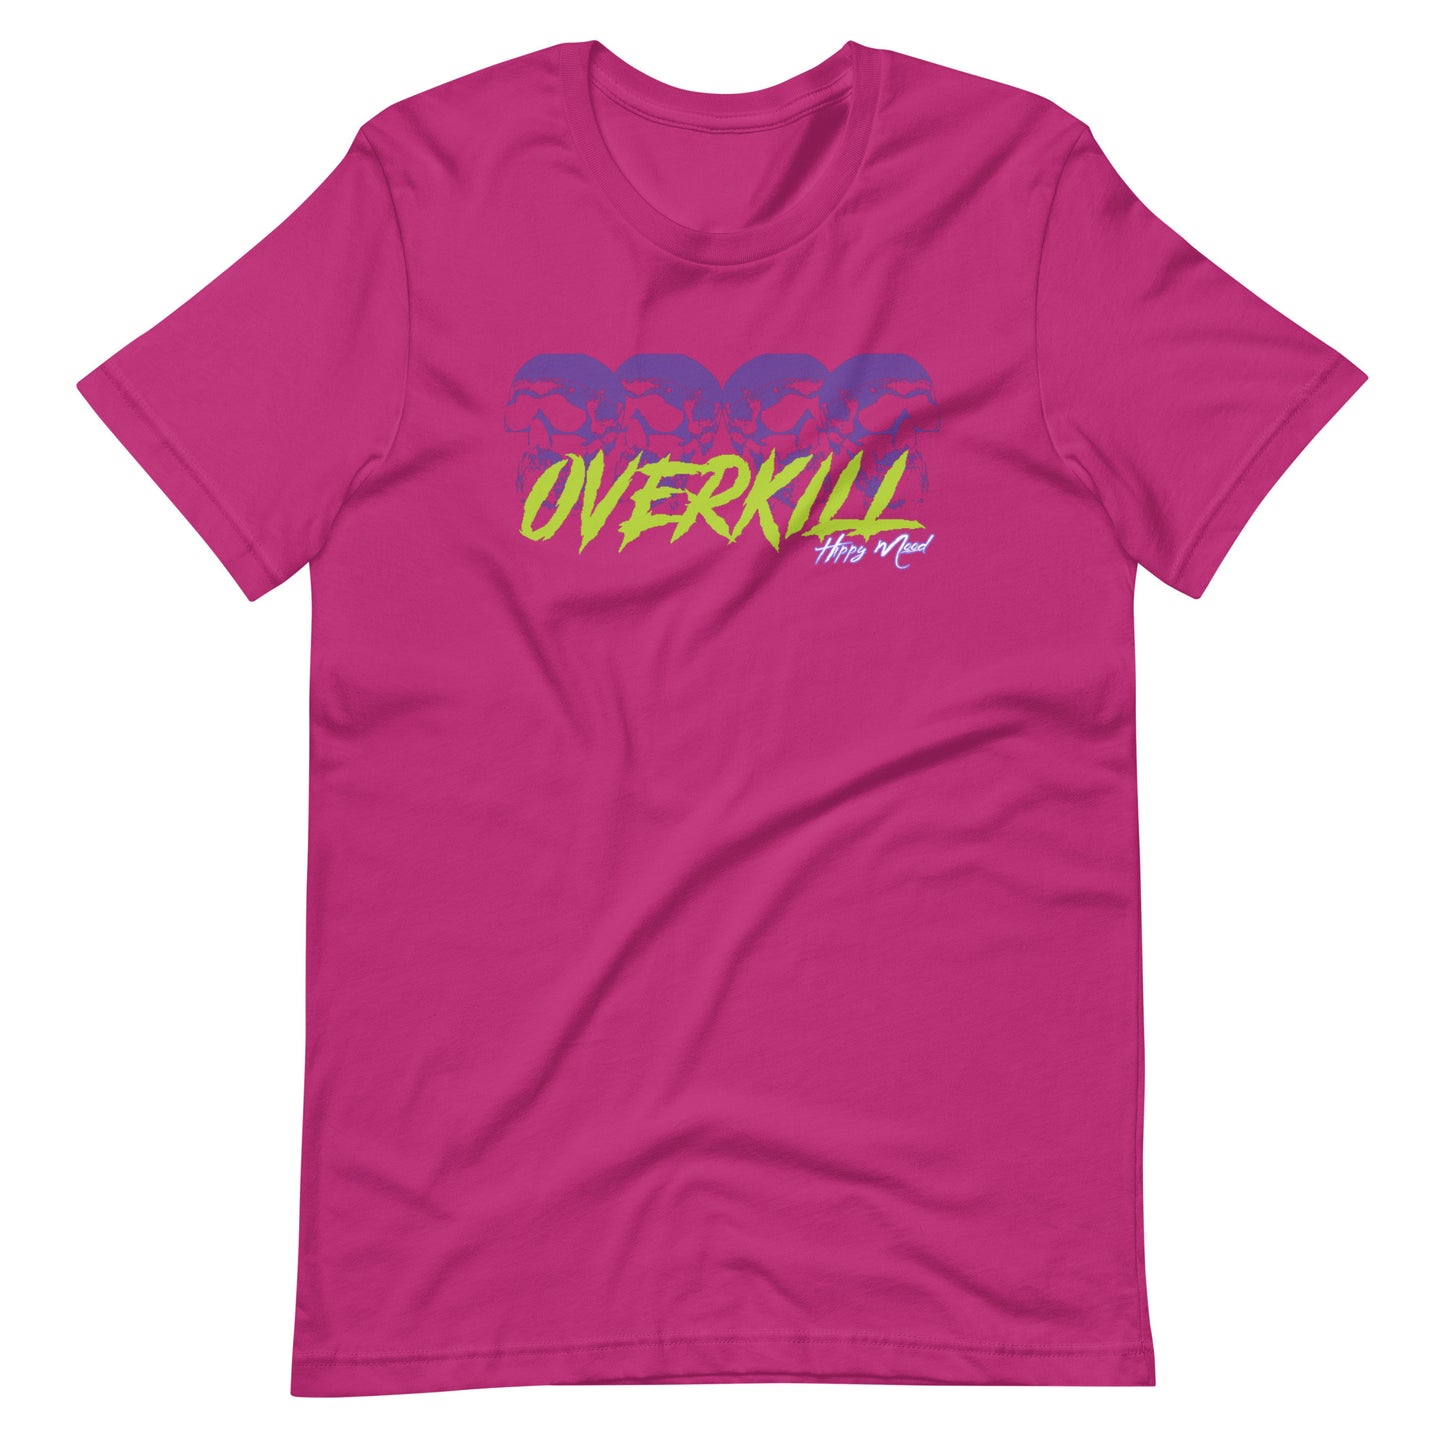 Over Kill | Unisex t-shirt